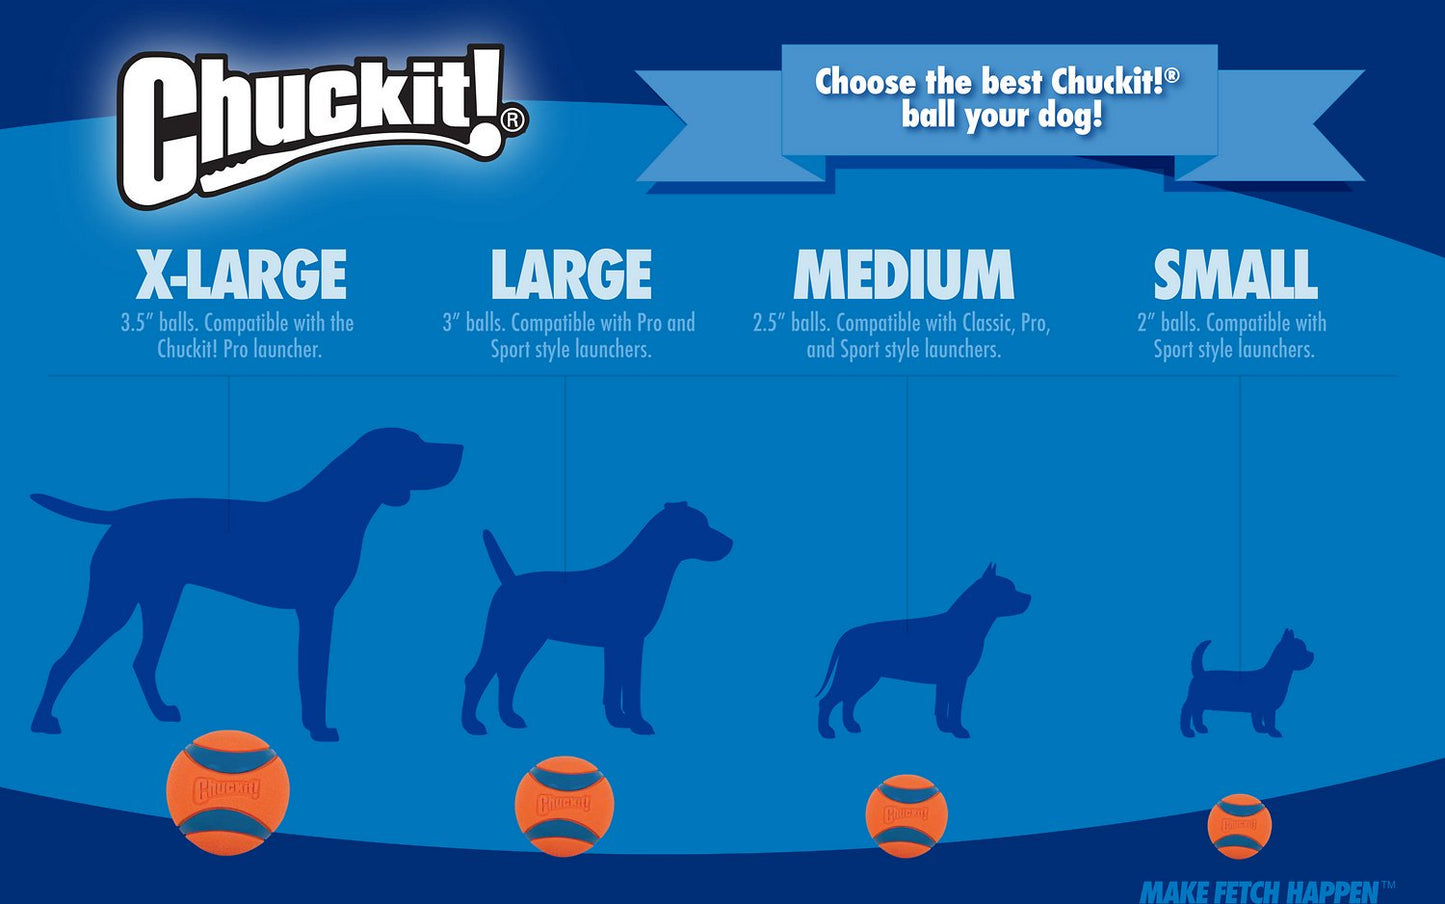 Canine Hardware Chuckit! Ultra Squeaker High Bounce Dog Toy Ball, Medium